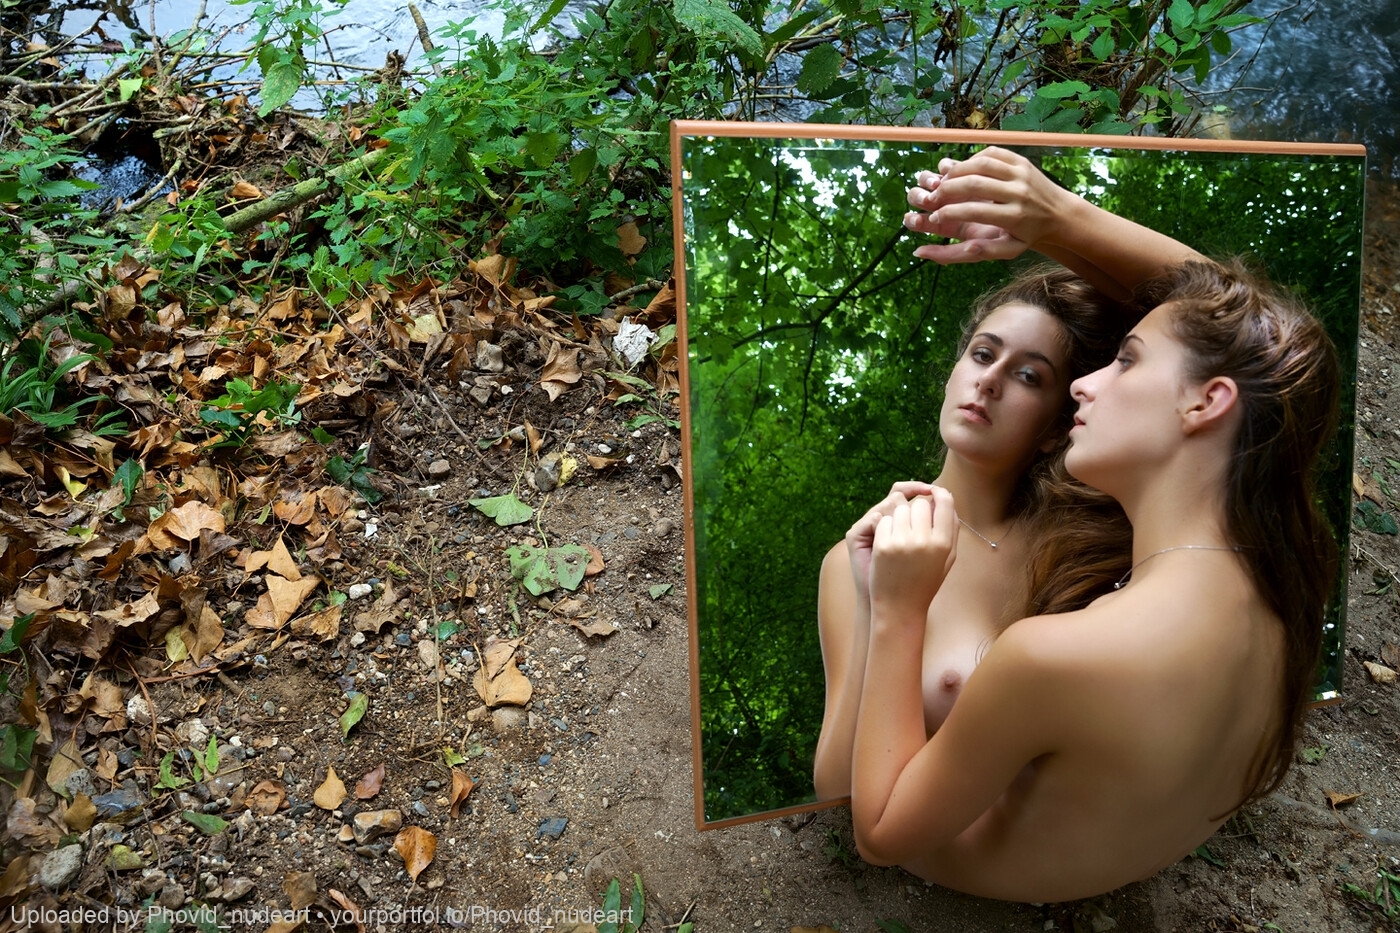 photographer Phovid nudeart uncategorized  photo